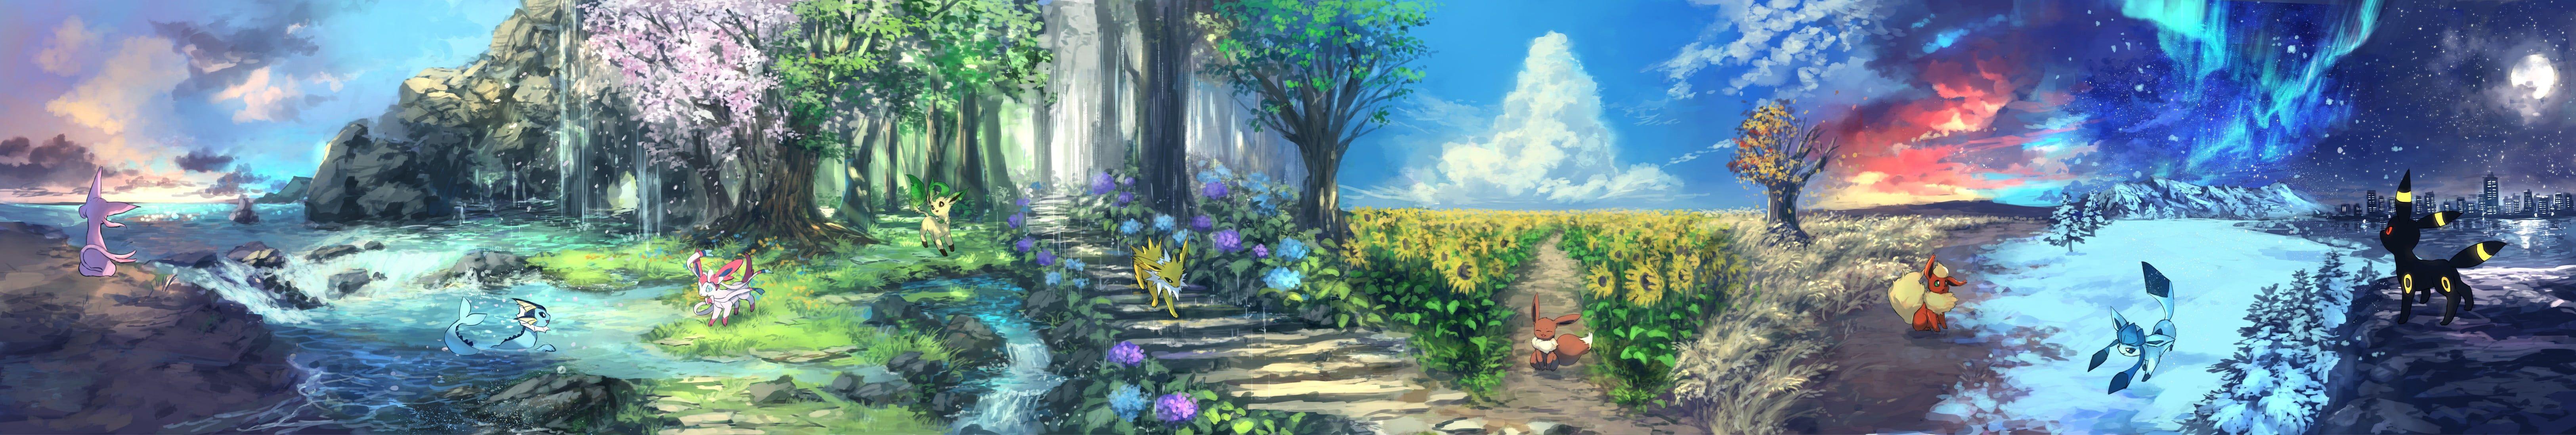 Pokemon Dual Screen Wallpapers - Top Free Pokemon Dual Screen